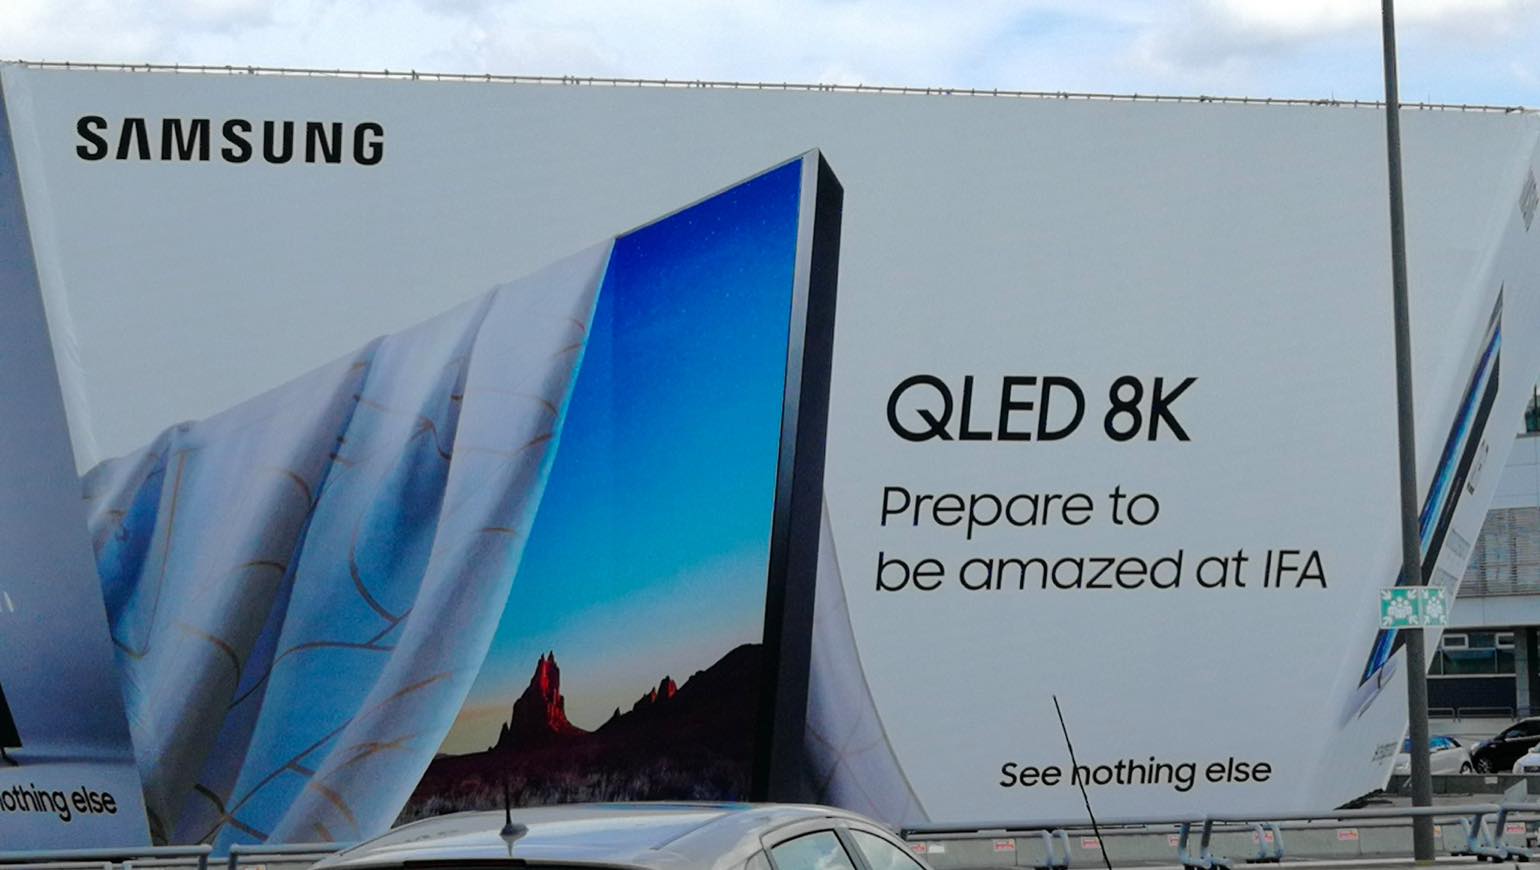 Samsung presents 8K QLED TV during IFA 2018